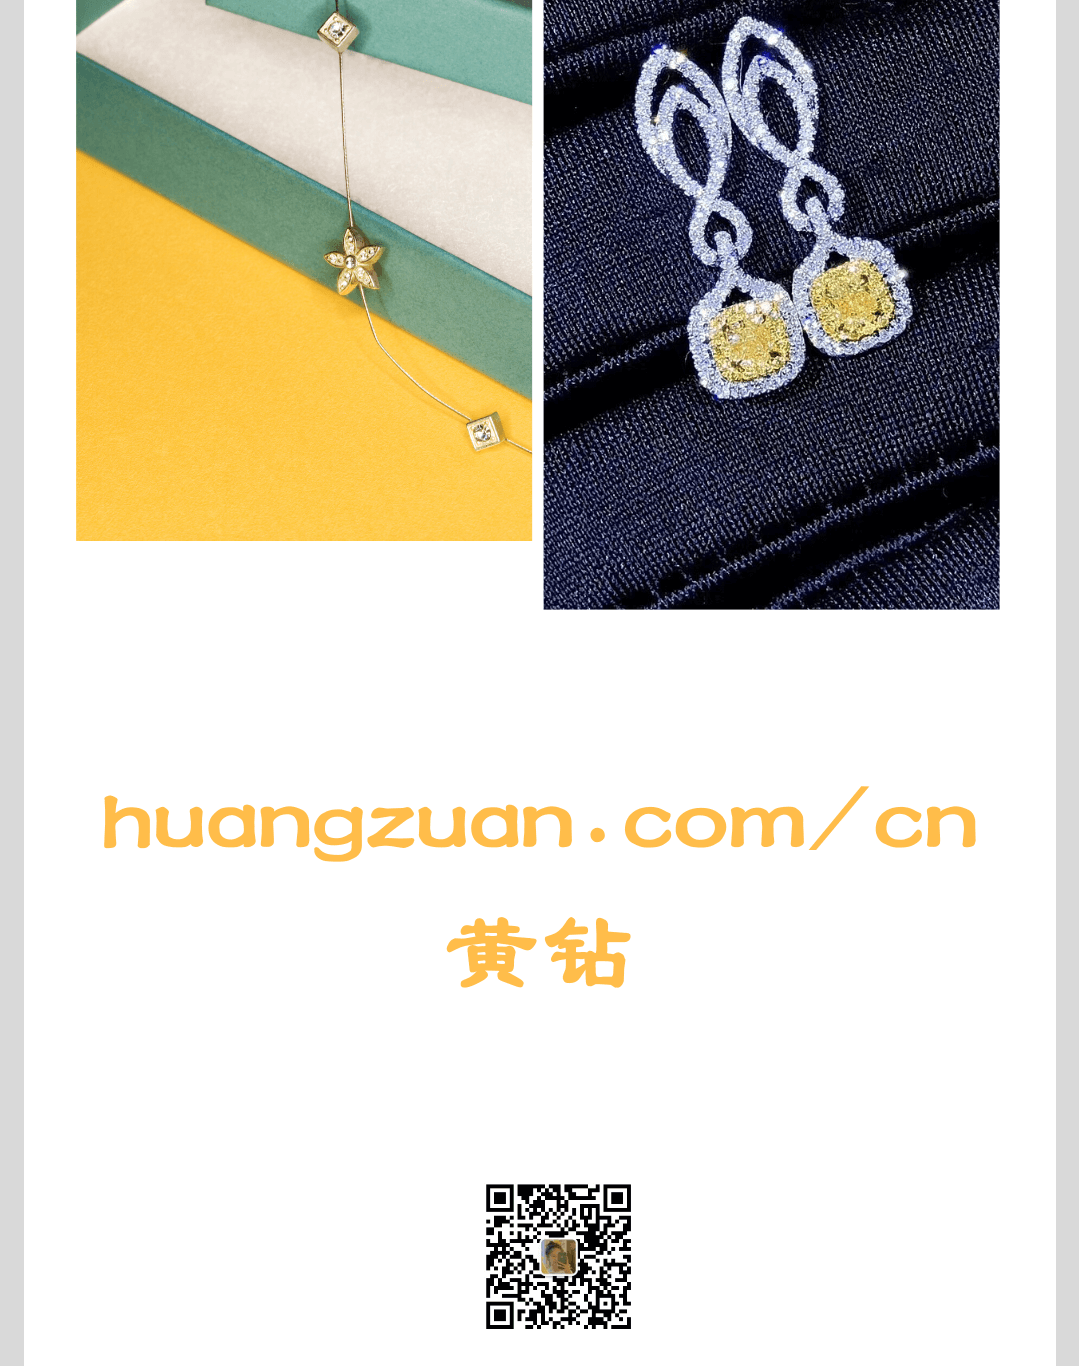 huangzuan.com